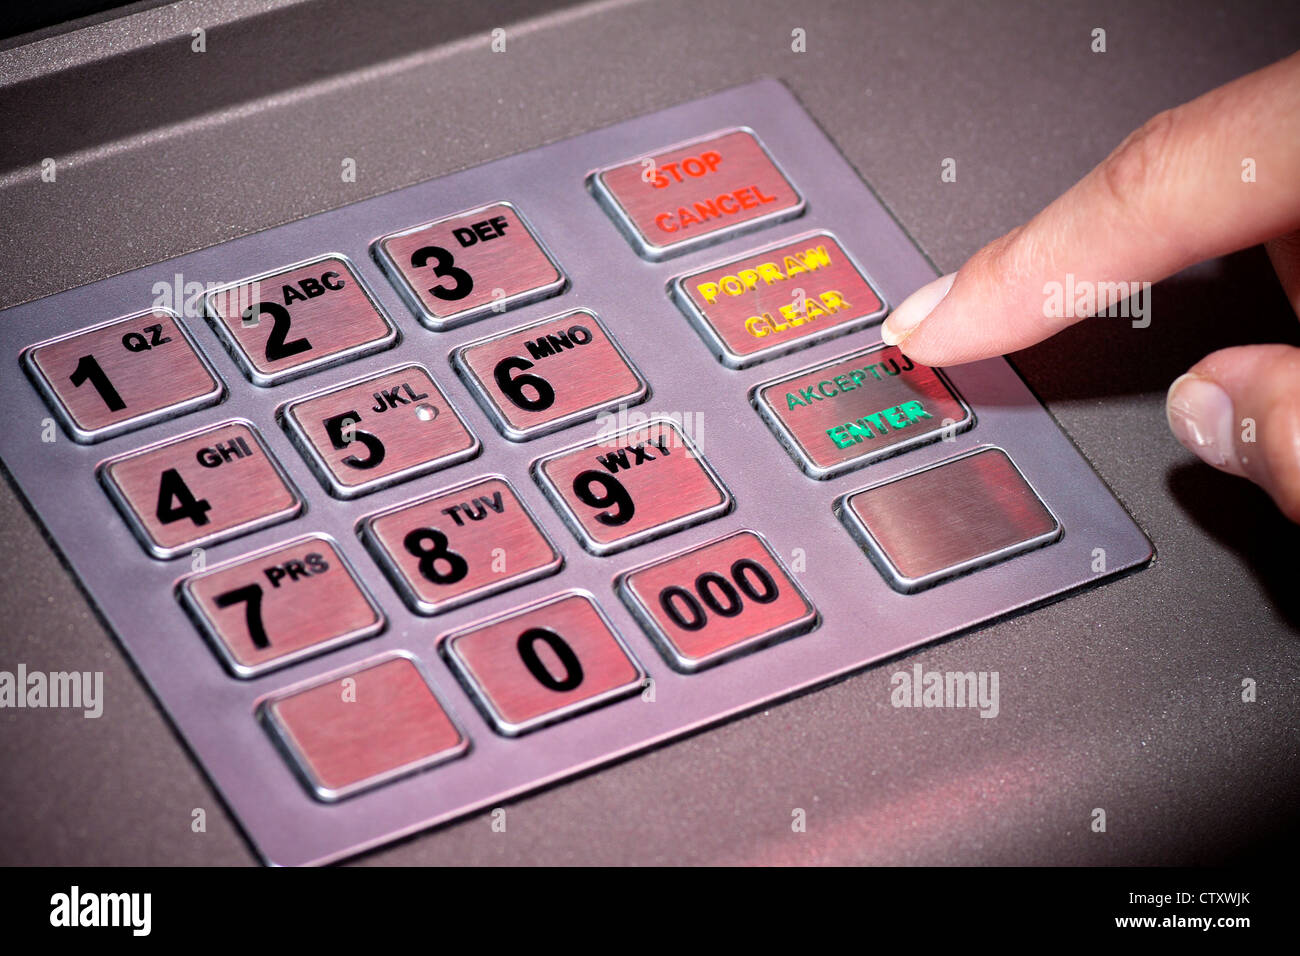 ATM machine keypad numbers. Entering atm cash machine pin code Stock Photo